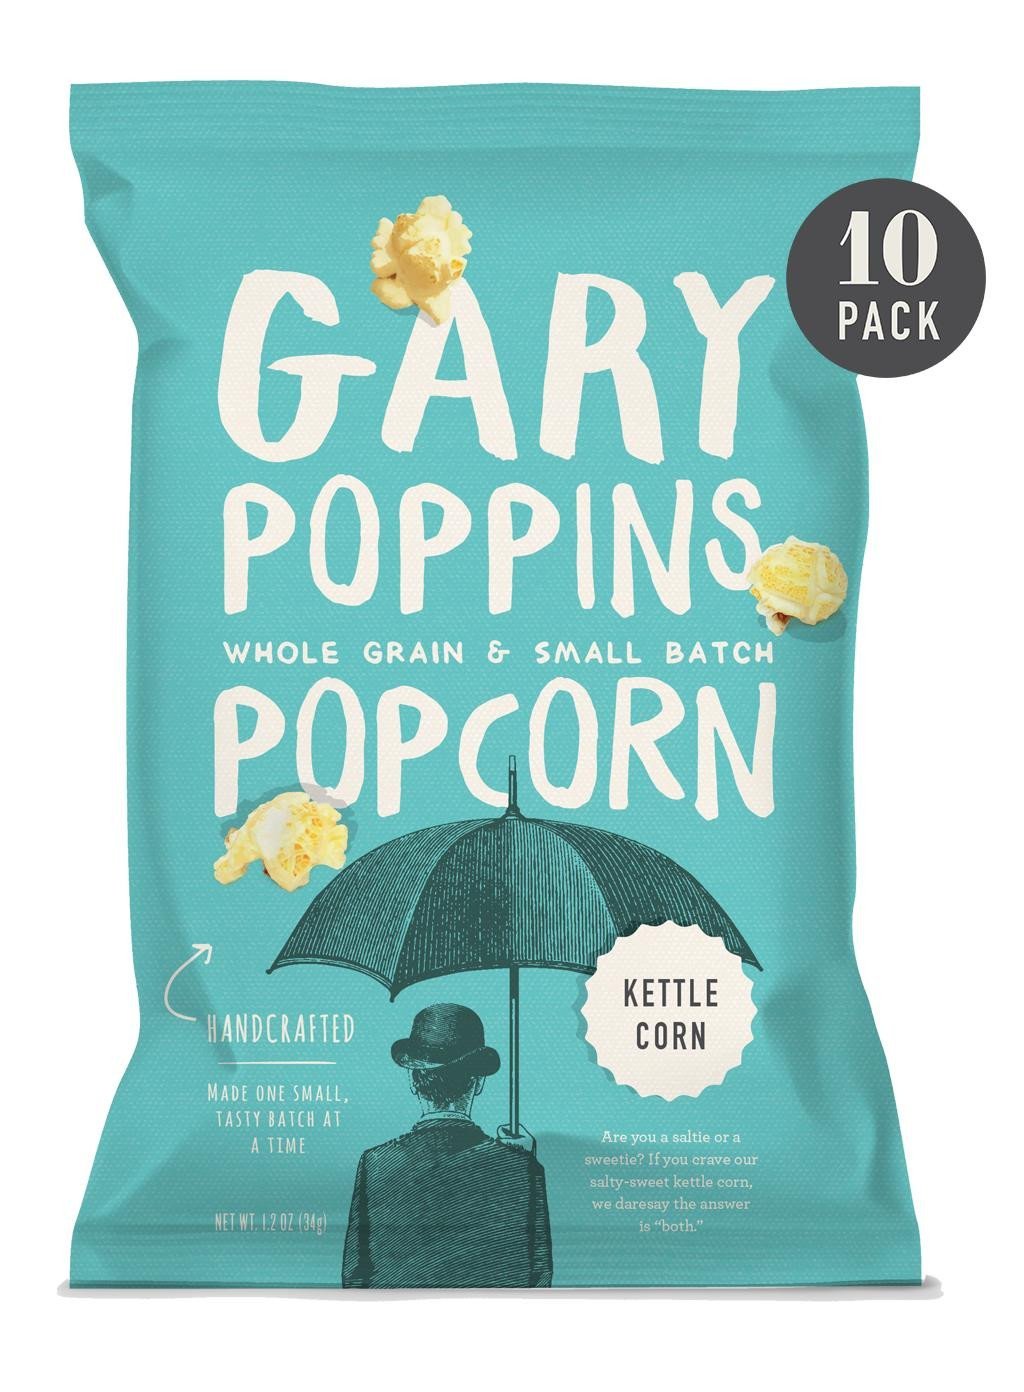 Kettle Corn - Gourmet Popcorn - Single Serve - 10 Pack Review - select ...